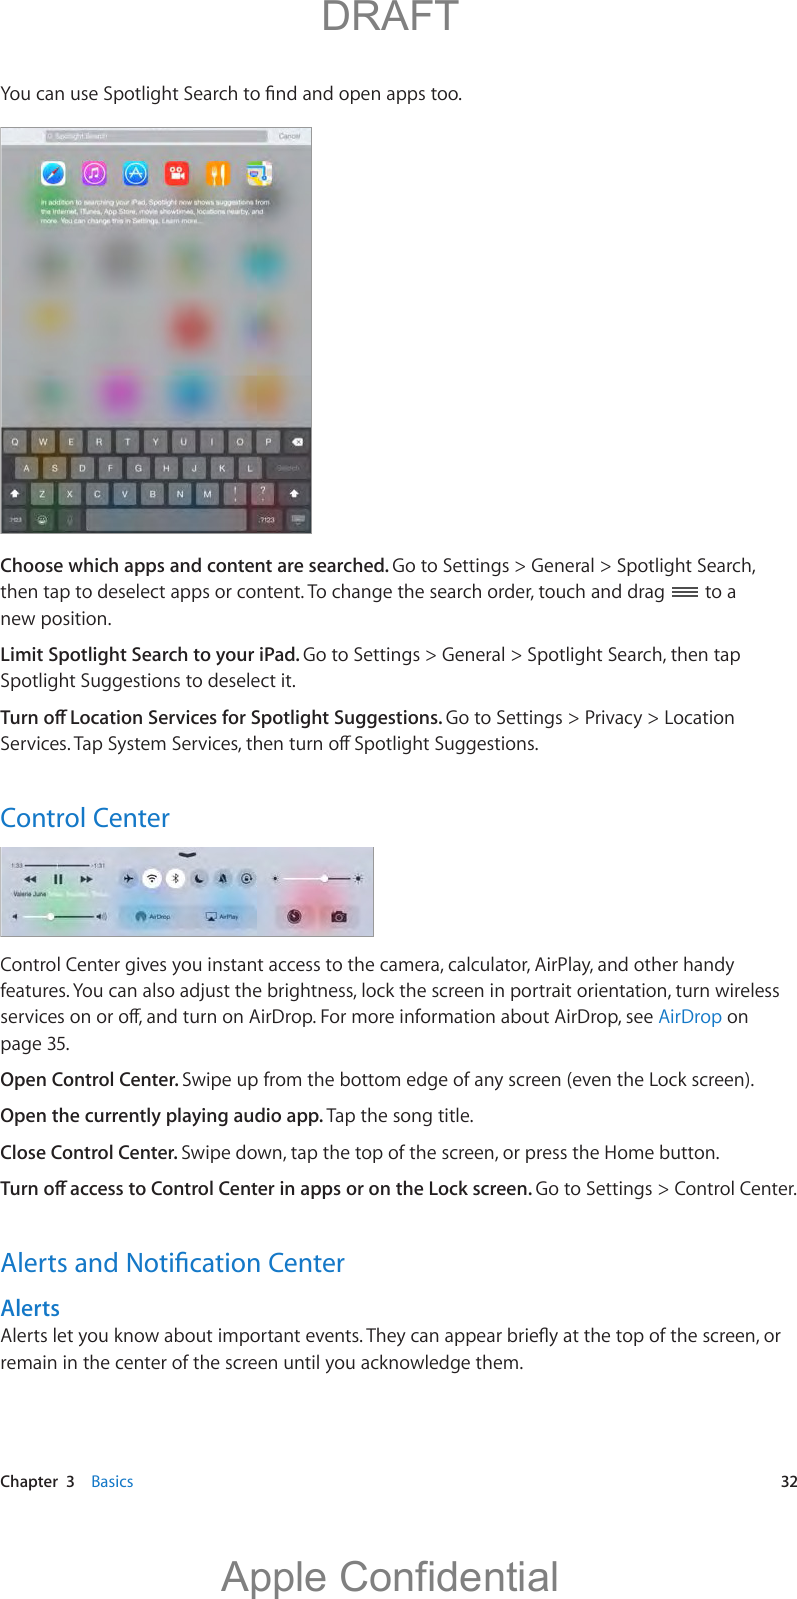   Chapter  3    Basics  32;QWECPWUG5RQVNKIJV5GCTEJVQ°PFCPFQRGPCRRUVQQChoose which apps and content are searched. Go to Settings &gt; General &gt; Spotlight Search, then tap to deselect apps or content. To change the search order, touch and drag   to a new position.Limit Spotlight Search to your iPad. Go to Settings &gt; General &gt; Spotlight Search, then tap Spotlight Suggestions to deselect it.6WTPQÒ.QECVKQP5GTXKEGUHQT5RQVNKIJV5WIIGUVKQPUGo to Settings &gt; Privacy &gt; Location 5GTXKEGU6CR5[UVGO5GTXKEGUVJGPVWTPQÒ5RQVNKIJV5WIIGUVKQPUControl CenterControl Center gives you instant access to the camera, calculator, AirPlay, and other handy HGCVWTGU;QWECPCNUQCFLWUVVJGDTKIJVPGUUNQEMVJGUETGGPKPRQTVTCKVQTKGPVCVKQPVWTPYKTGNGUUUGTXKEGUQPQTQÒCPFVWTPQP#KT&amp;TQR(QTOQTGKPHQTOCVKQPCDQWV#KT&amp;TQRUGGAirDrop on page 35.Open Control Center. Swipe up from the bottom edge of any screen (even the Lock screen).Open the currently playing audio app. Tap the song title.Close Control Center. Swipe down, tap the top of the screen, or press the Home button.6WTPQÒCEEGUUVQ%QPVTQN%GPVGTKPCRRUQTQPVJG.QEMUETGGPGo to Settings &gt; Control Center. #NGTVUCPF0QVK°ECVKQP%GPVGTAlerts#NGTVUNGV[QWMPQYCDQWVKORQTVCPVGXGPVU6JG[ECPCRRGCTDTKG±[CVVJGVQRQHVJGUETGGPQTremain in the center of the screen until you acknowledge them.          DRAFTApple Confidential